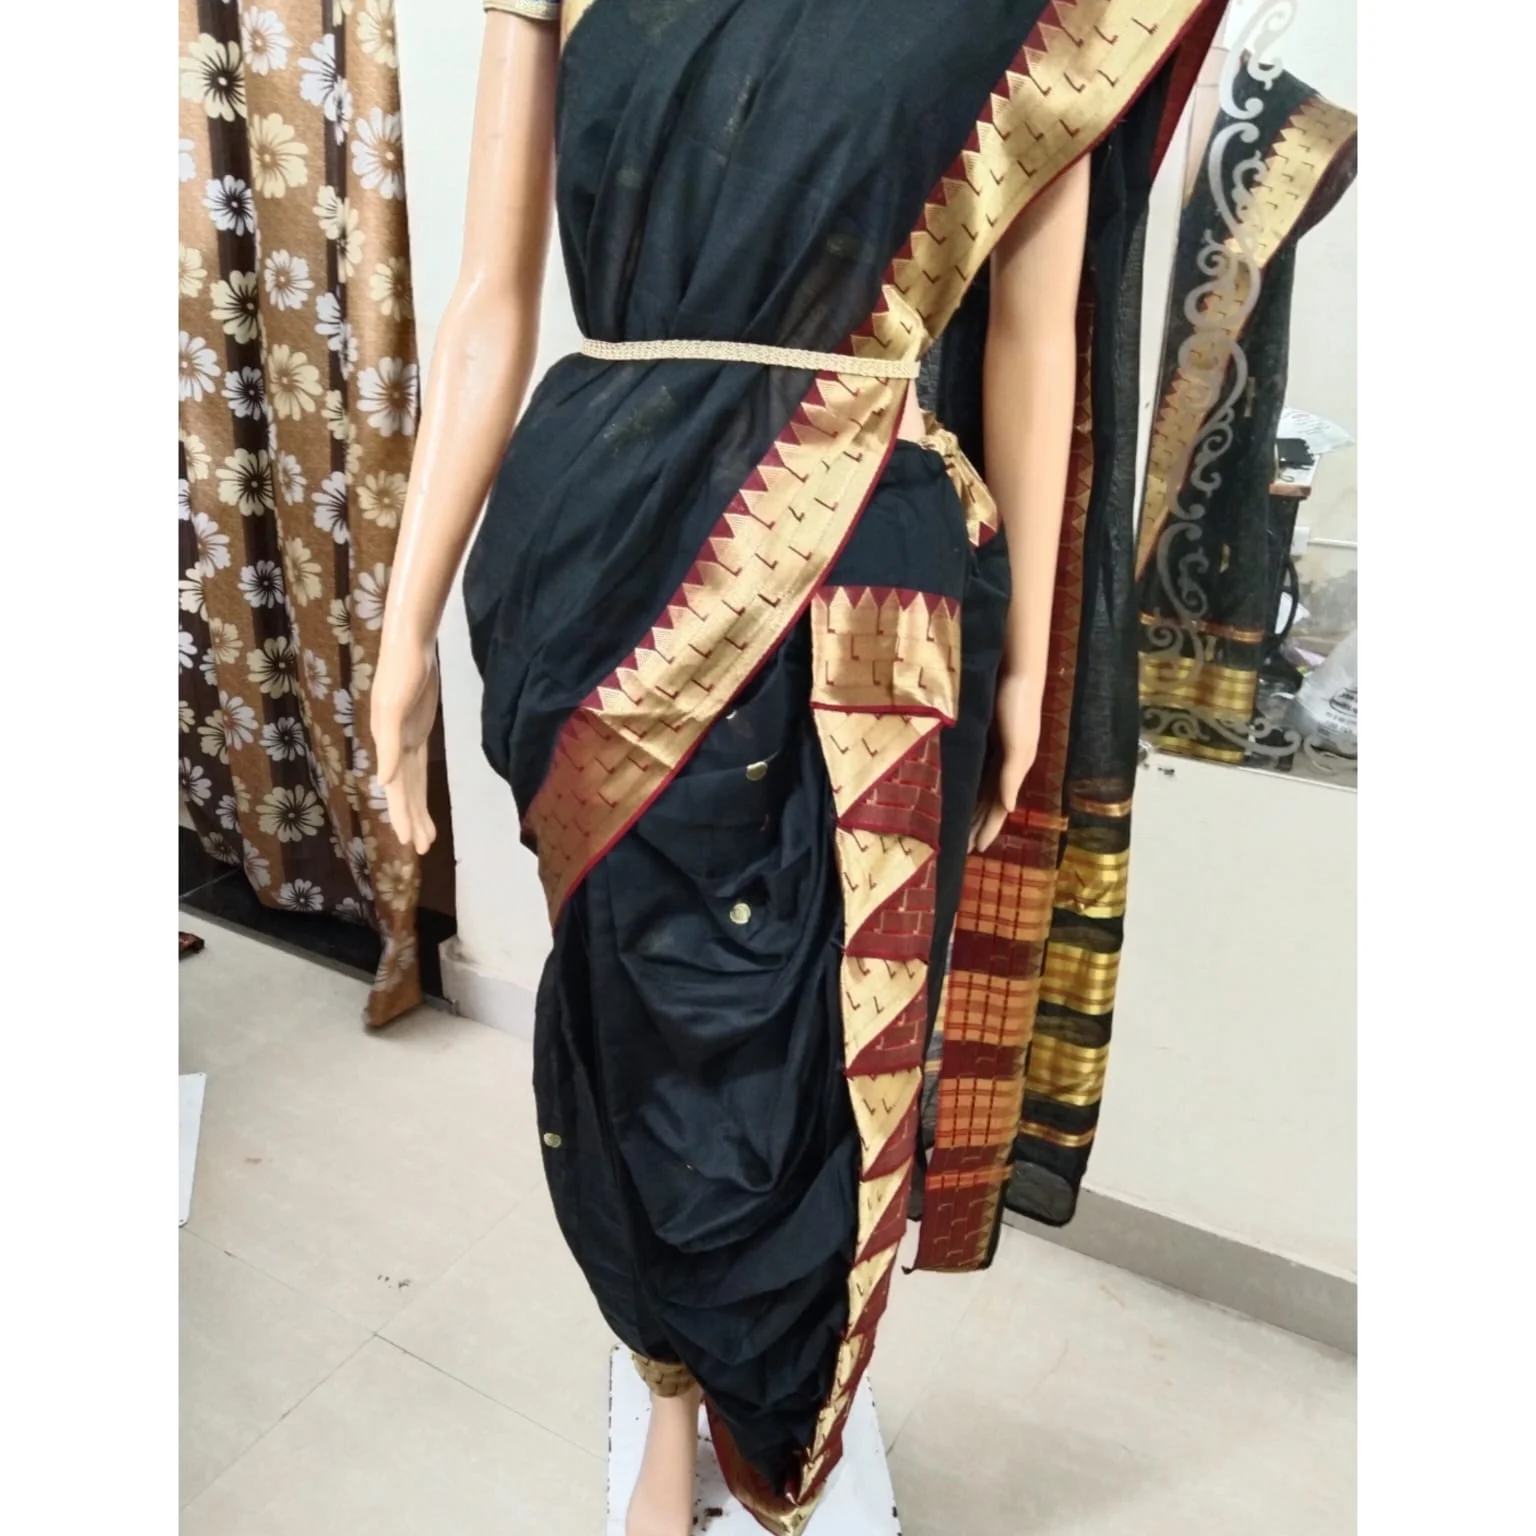 What jewellery goes with a Nauvari saree? - Quora